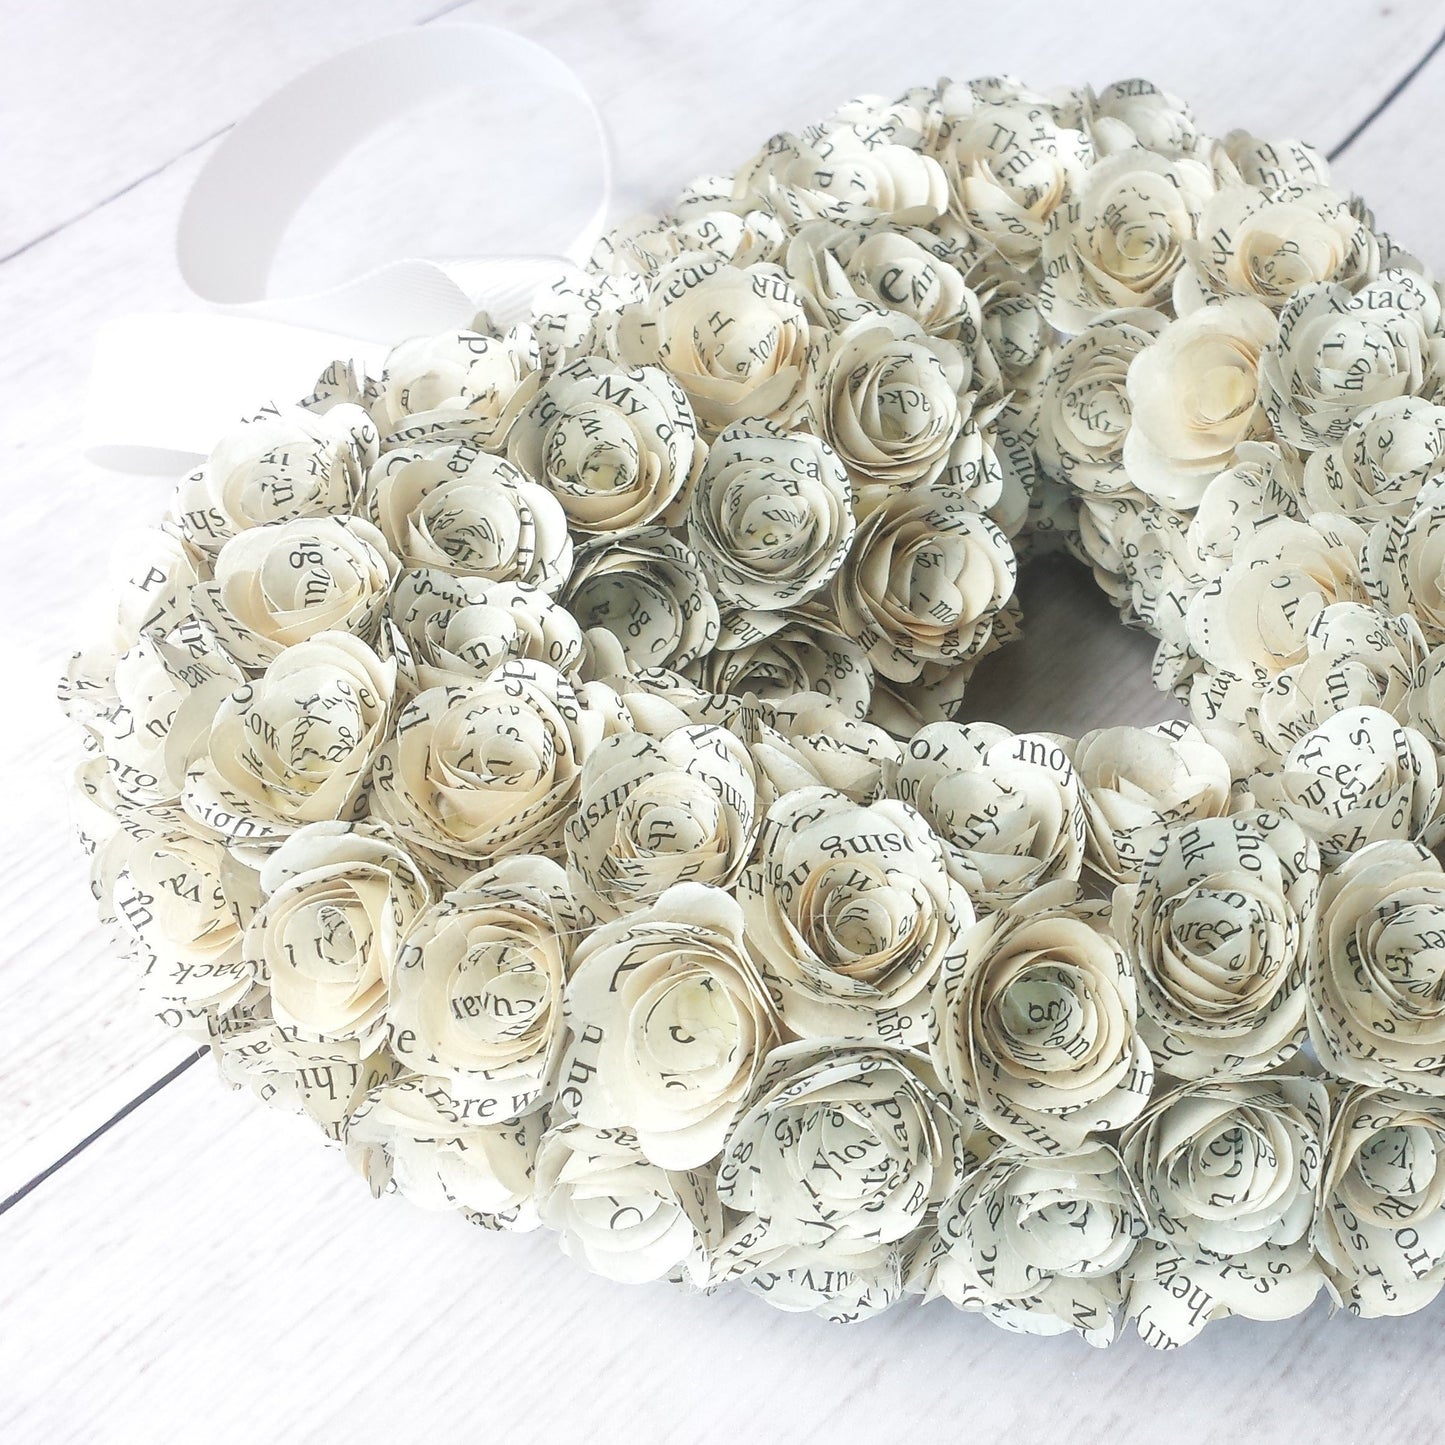 Handmade Heart Wreath - 15cm (6")